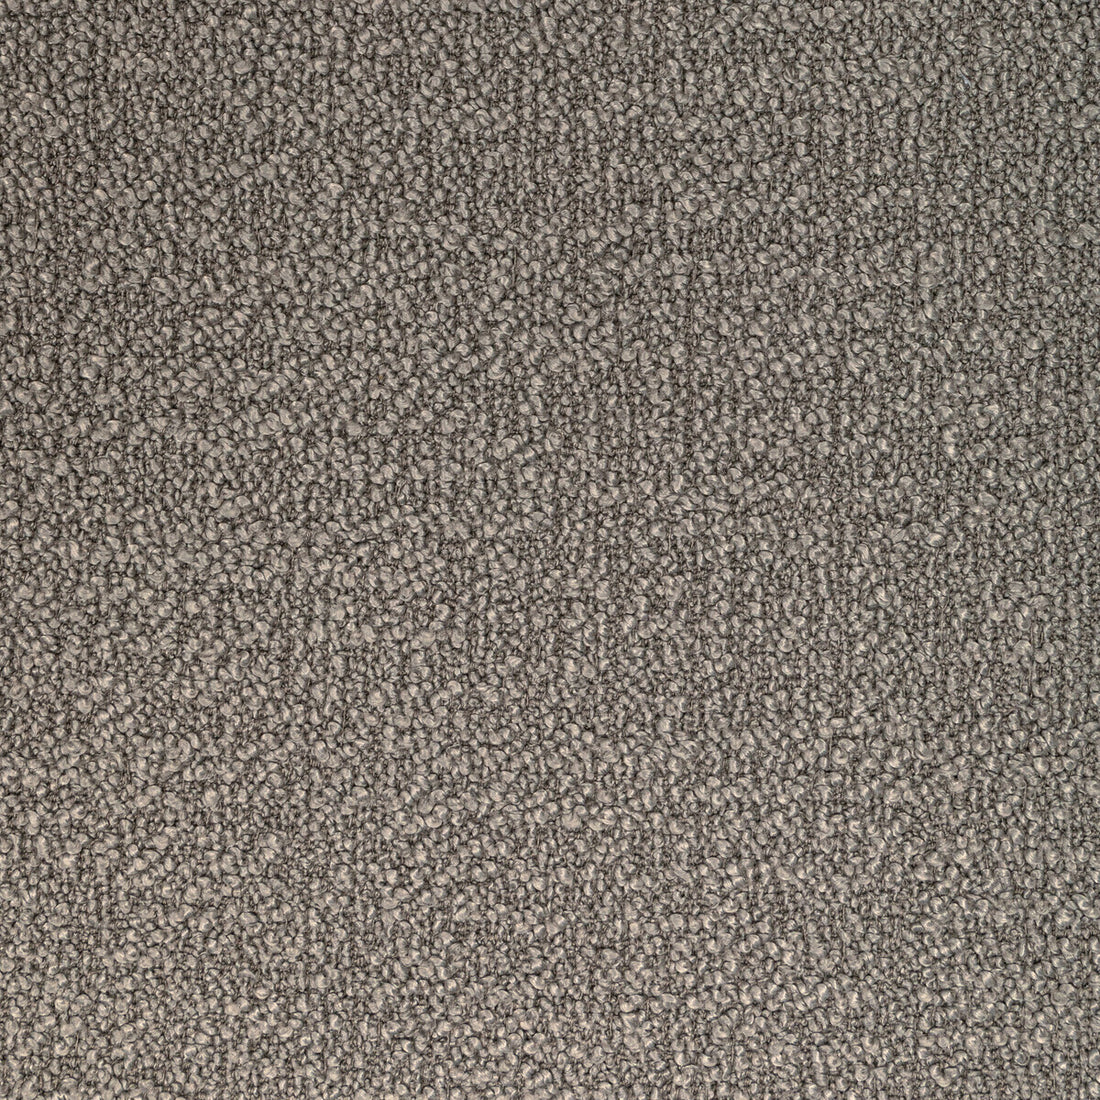 Kravet Smart fabric in 36857-1101 color - pattern 36857.1101.0 - by Kravet Smart in the Performance Kravetarmor collection